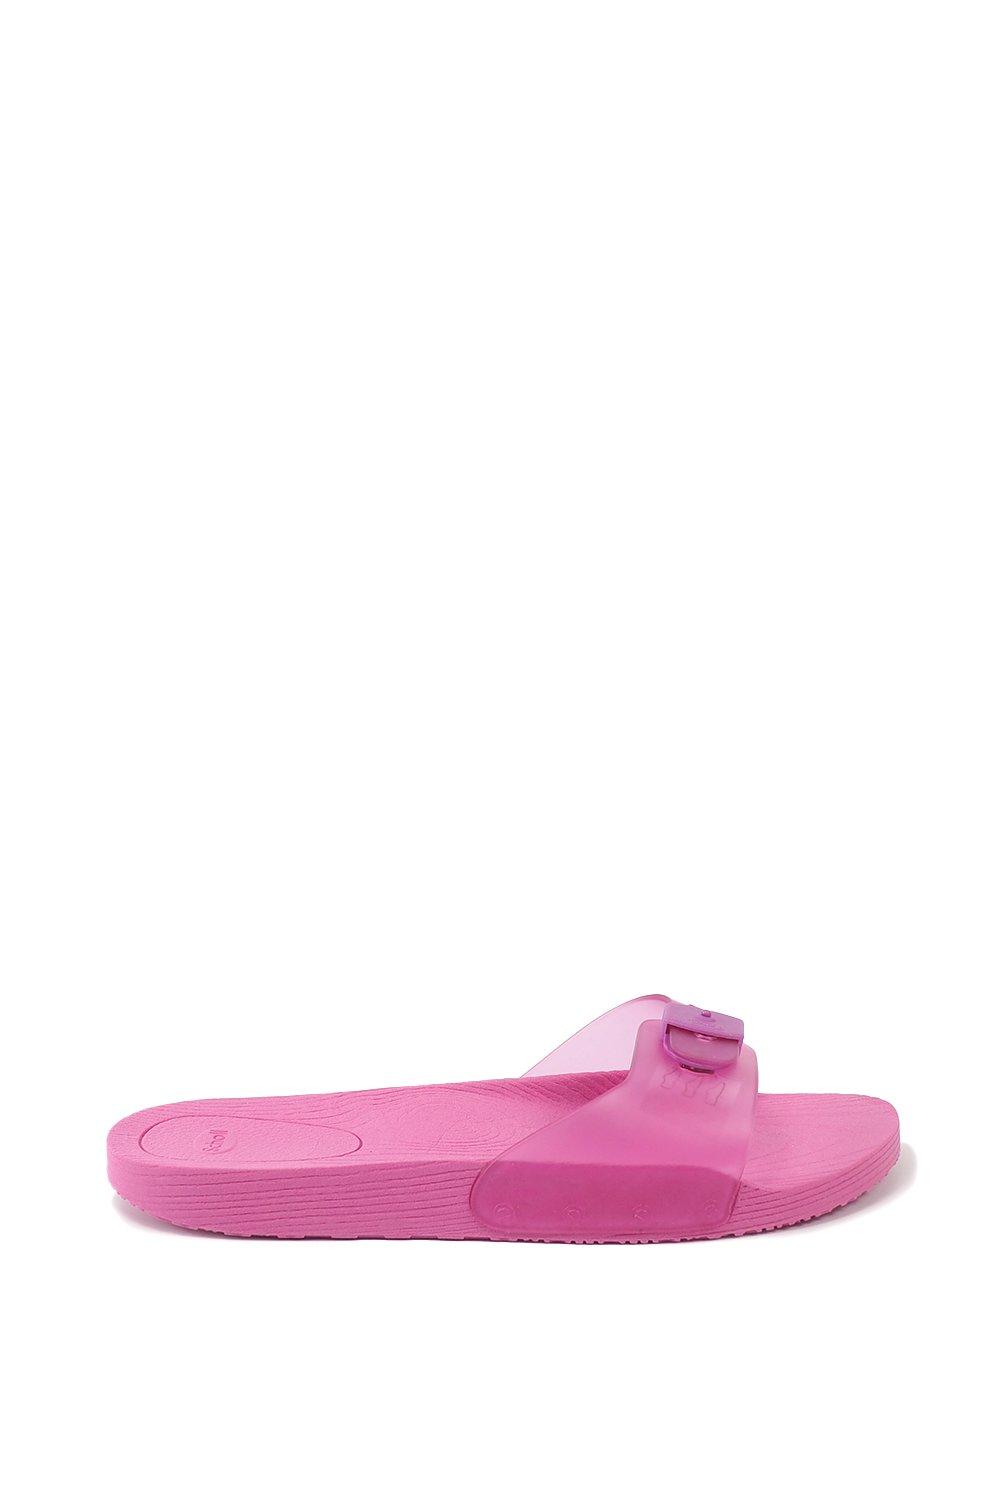 'Scholl Pop' Sandal Slide